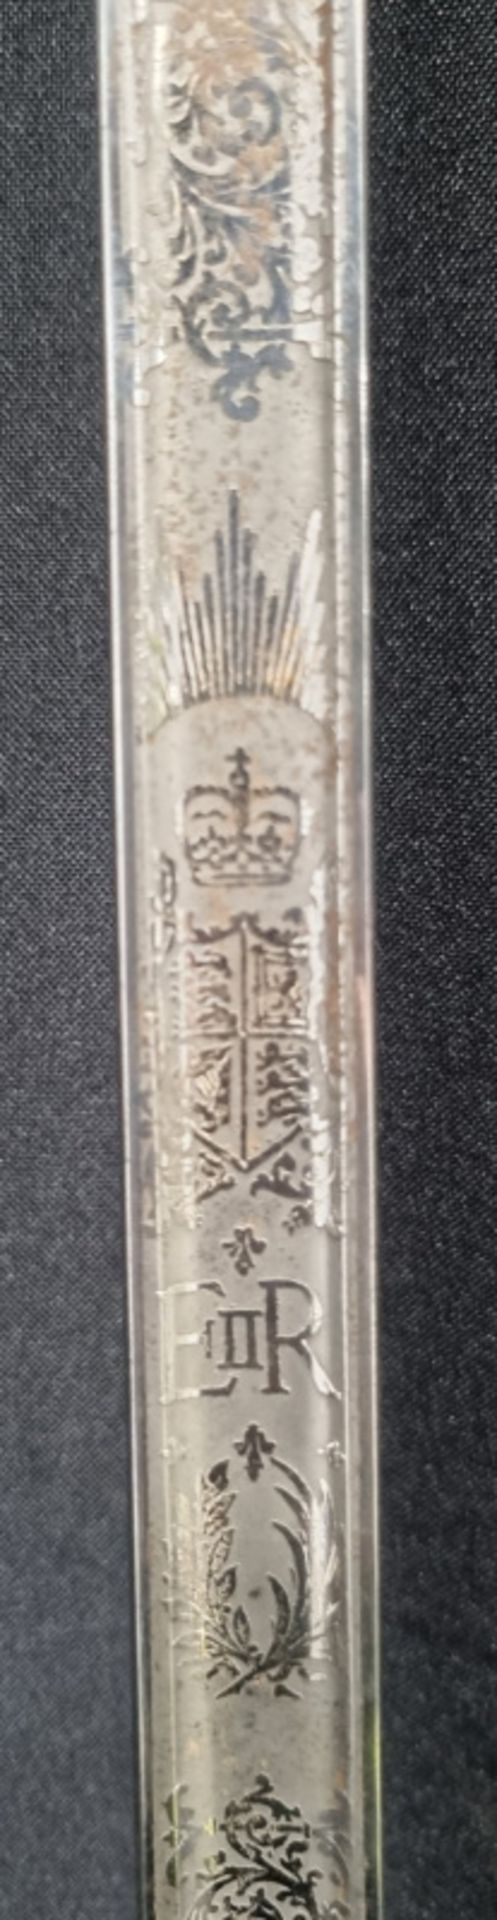 Wilkinson Sword Ltd. Ceremonial Sword - serial number 84032 - Image 9 of 11